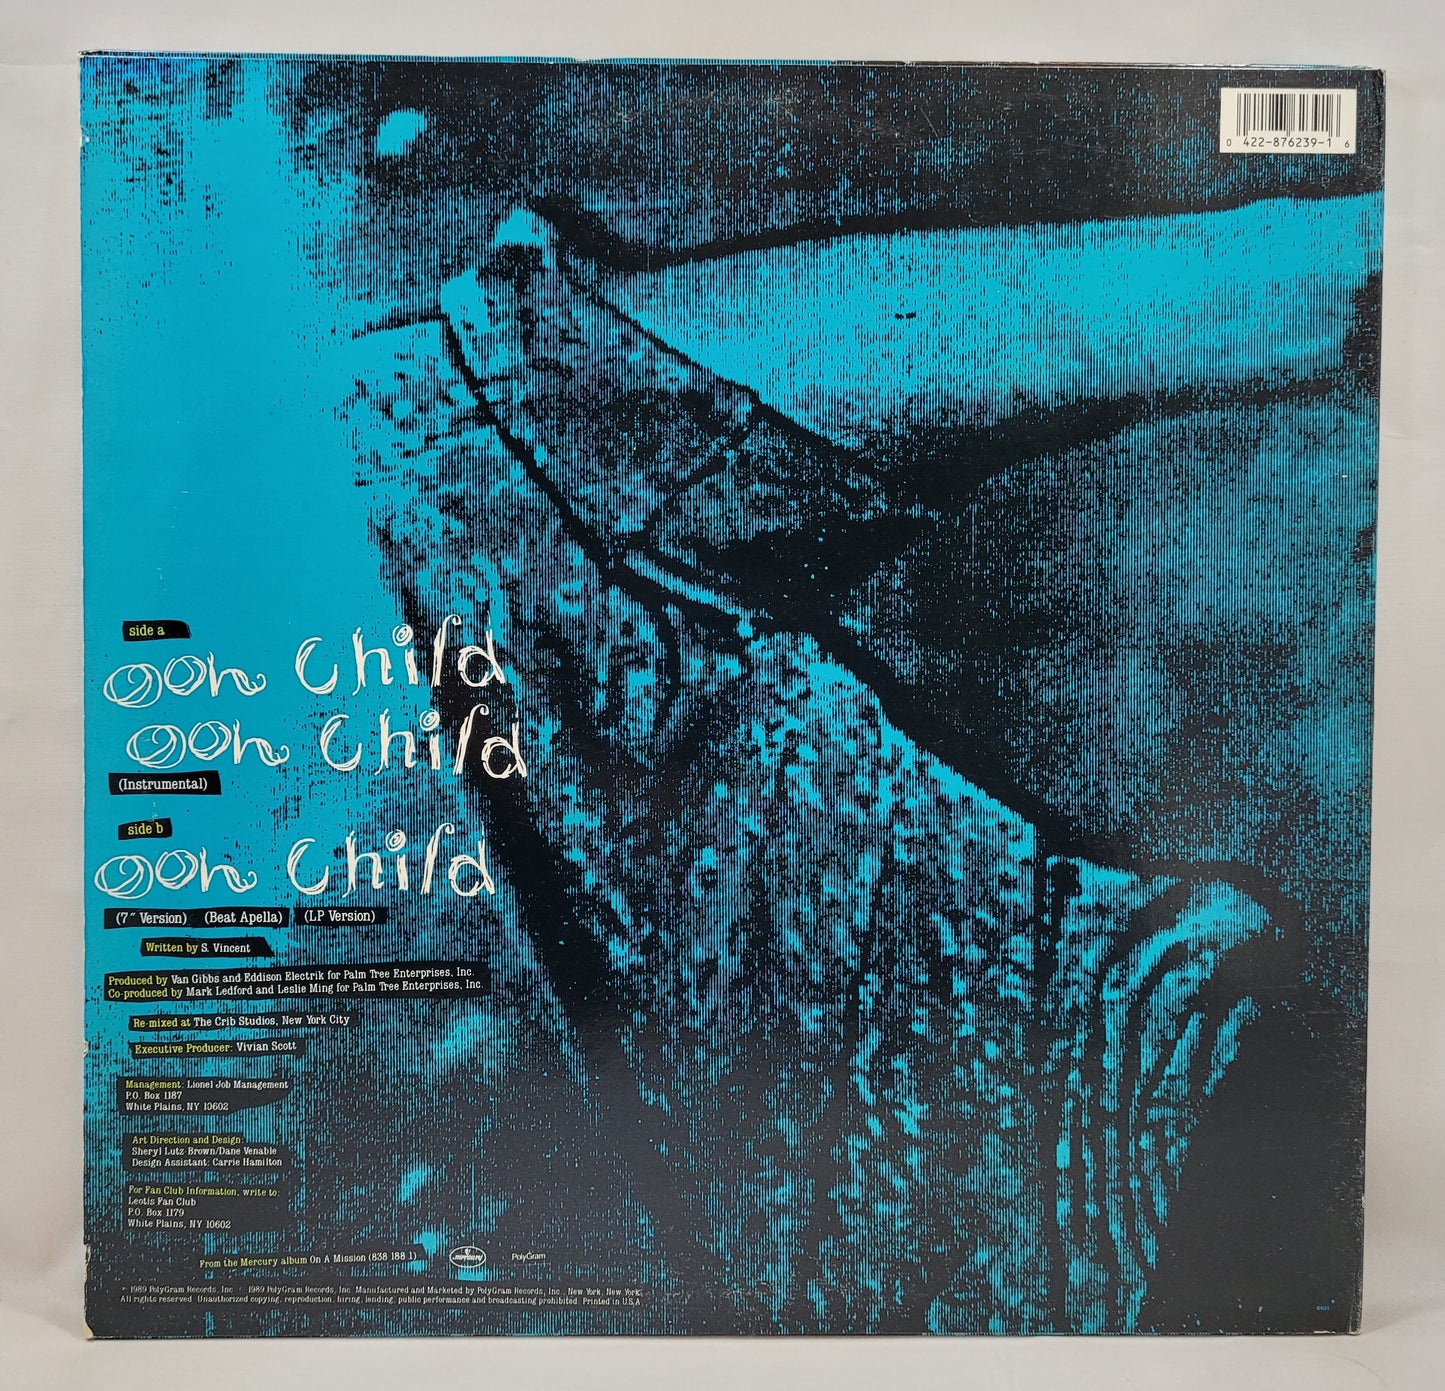 Leotis - Ooh Child [Vinyl Record 12" Single]